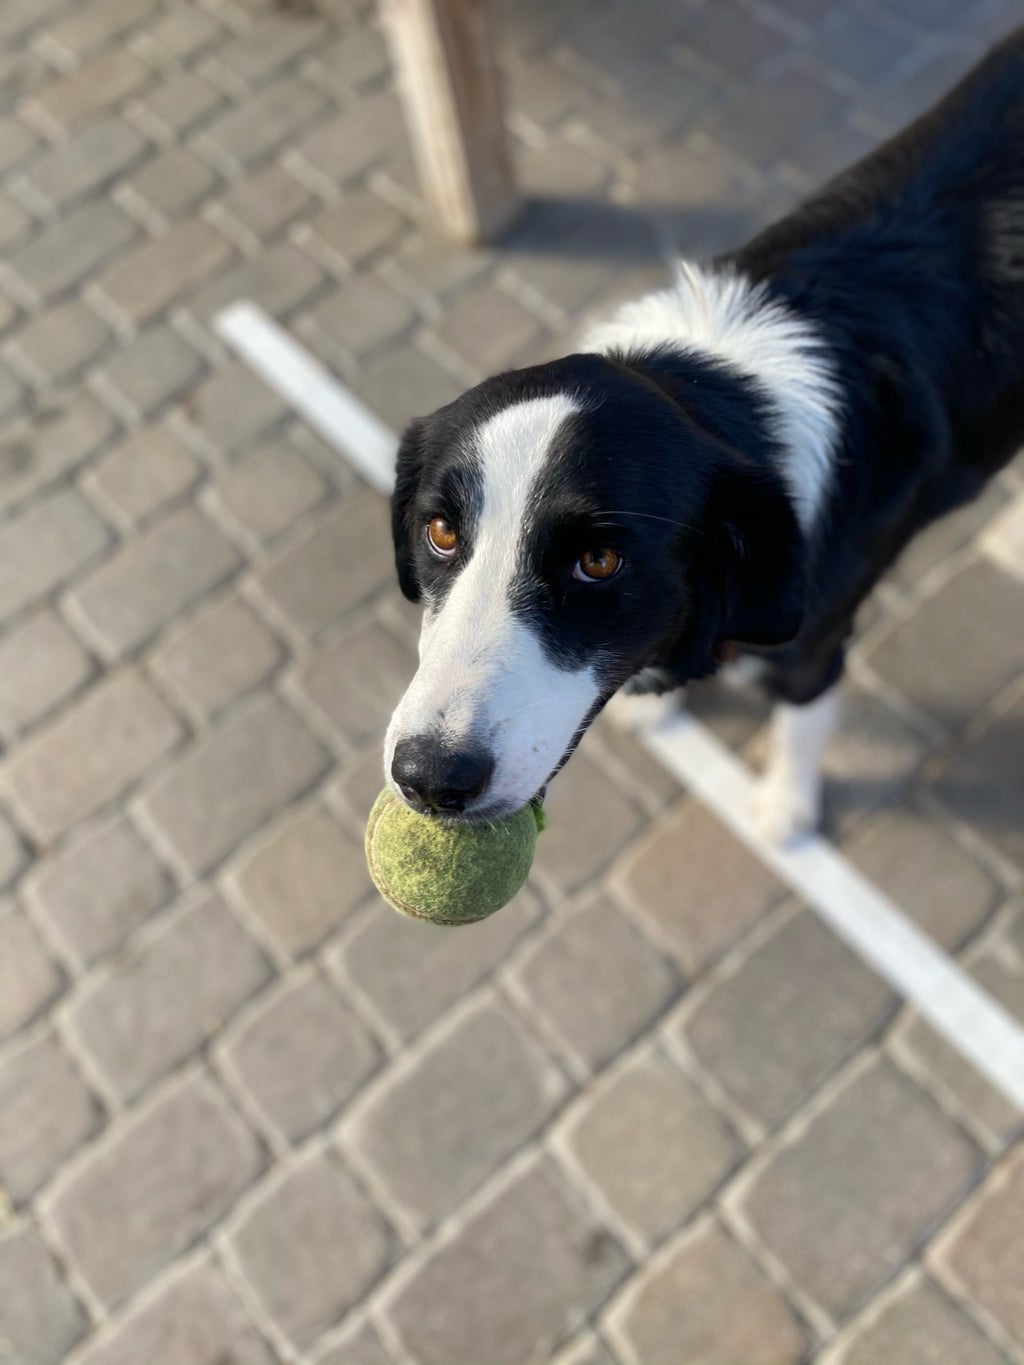 Dog holding a tennis ball